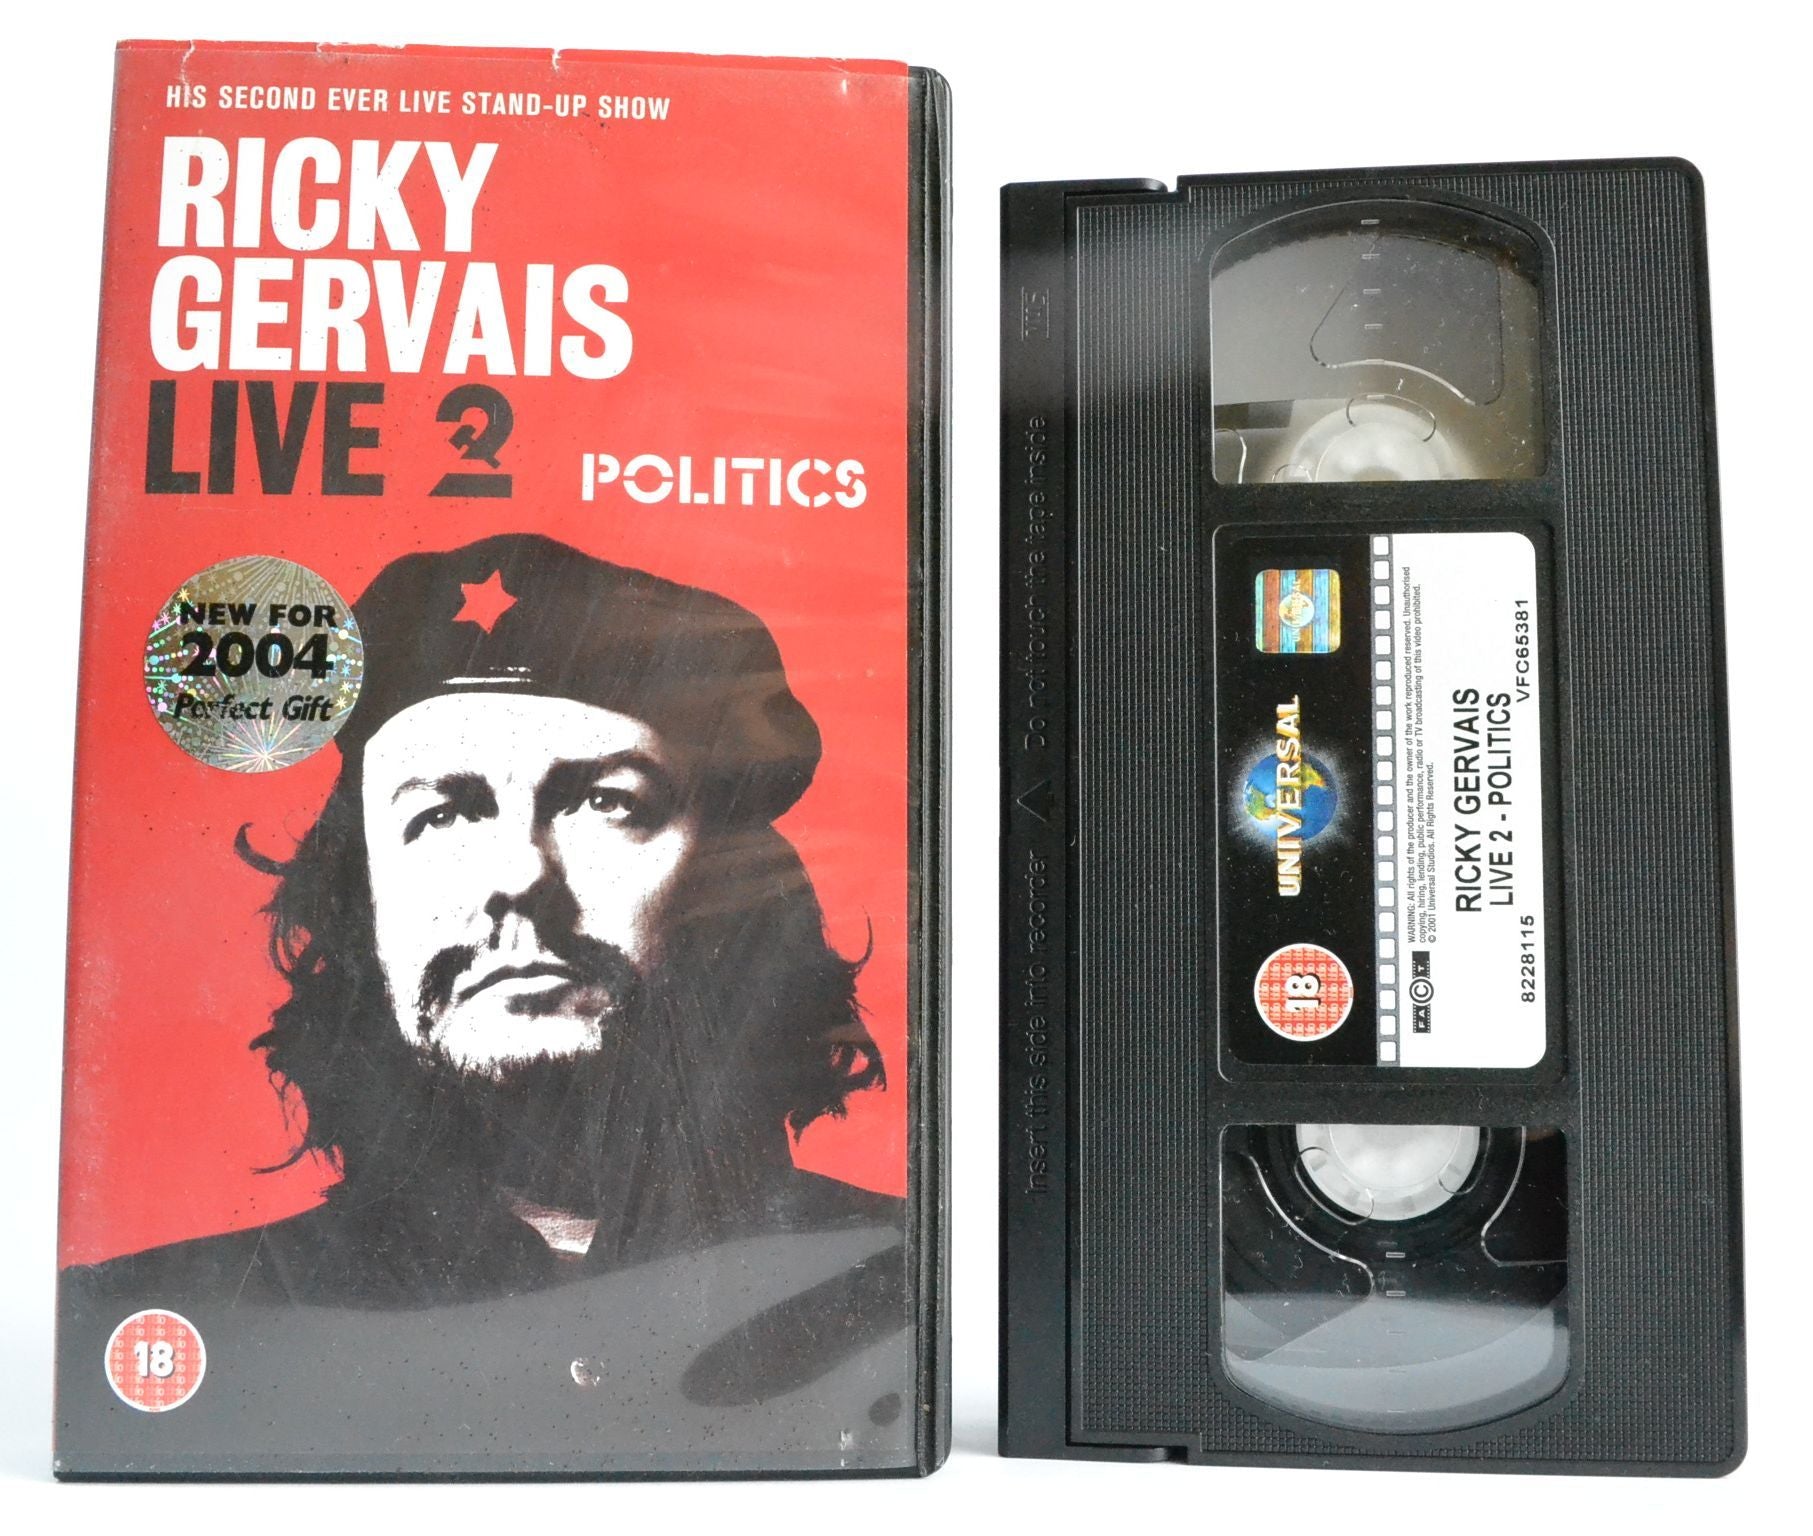 Ricky Gervais: Live 2 (Politics) Stand-Up Comedy - Palace [4 Bonuses Inside] VHS-